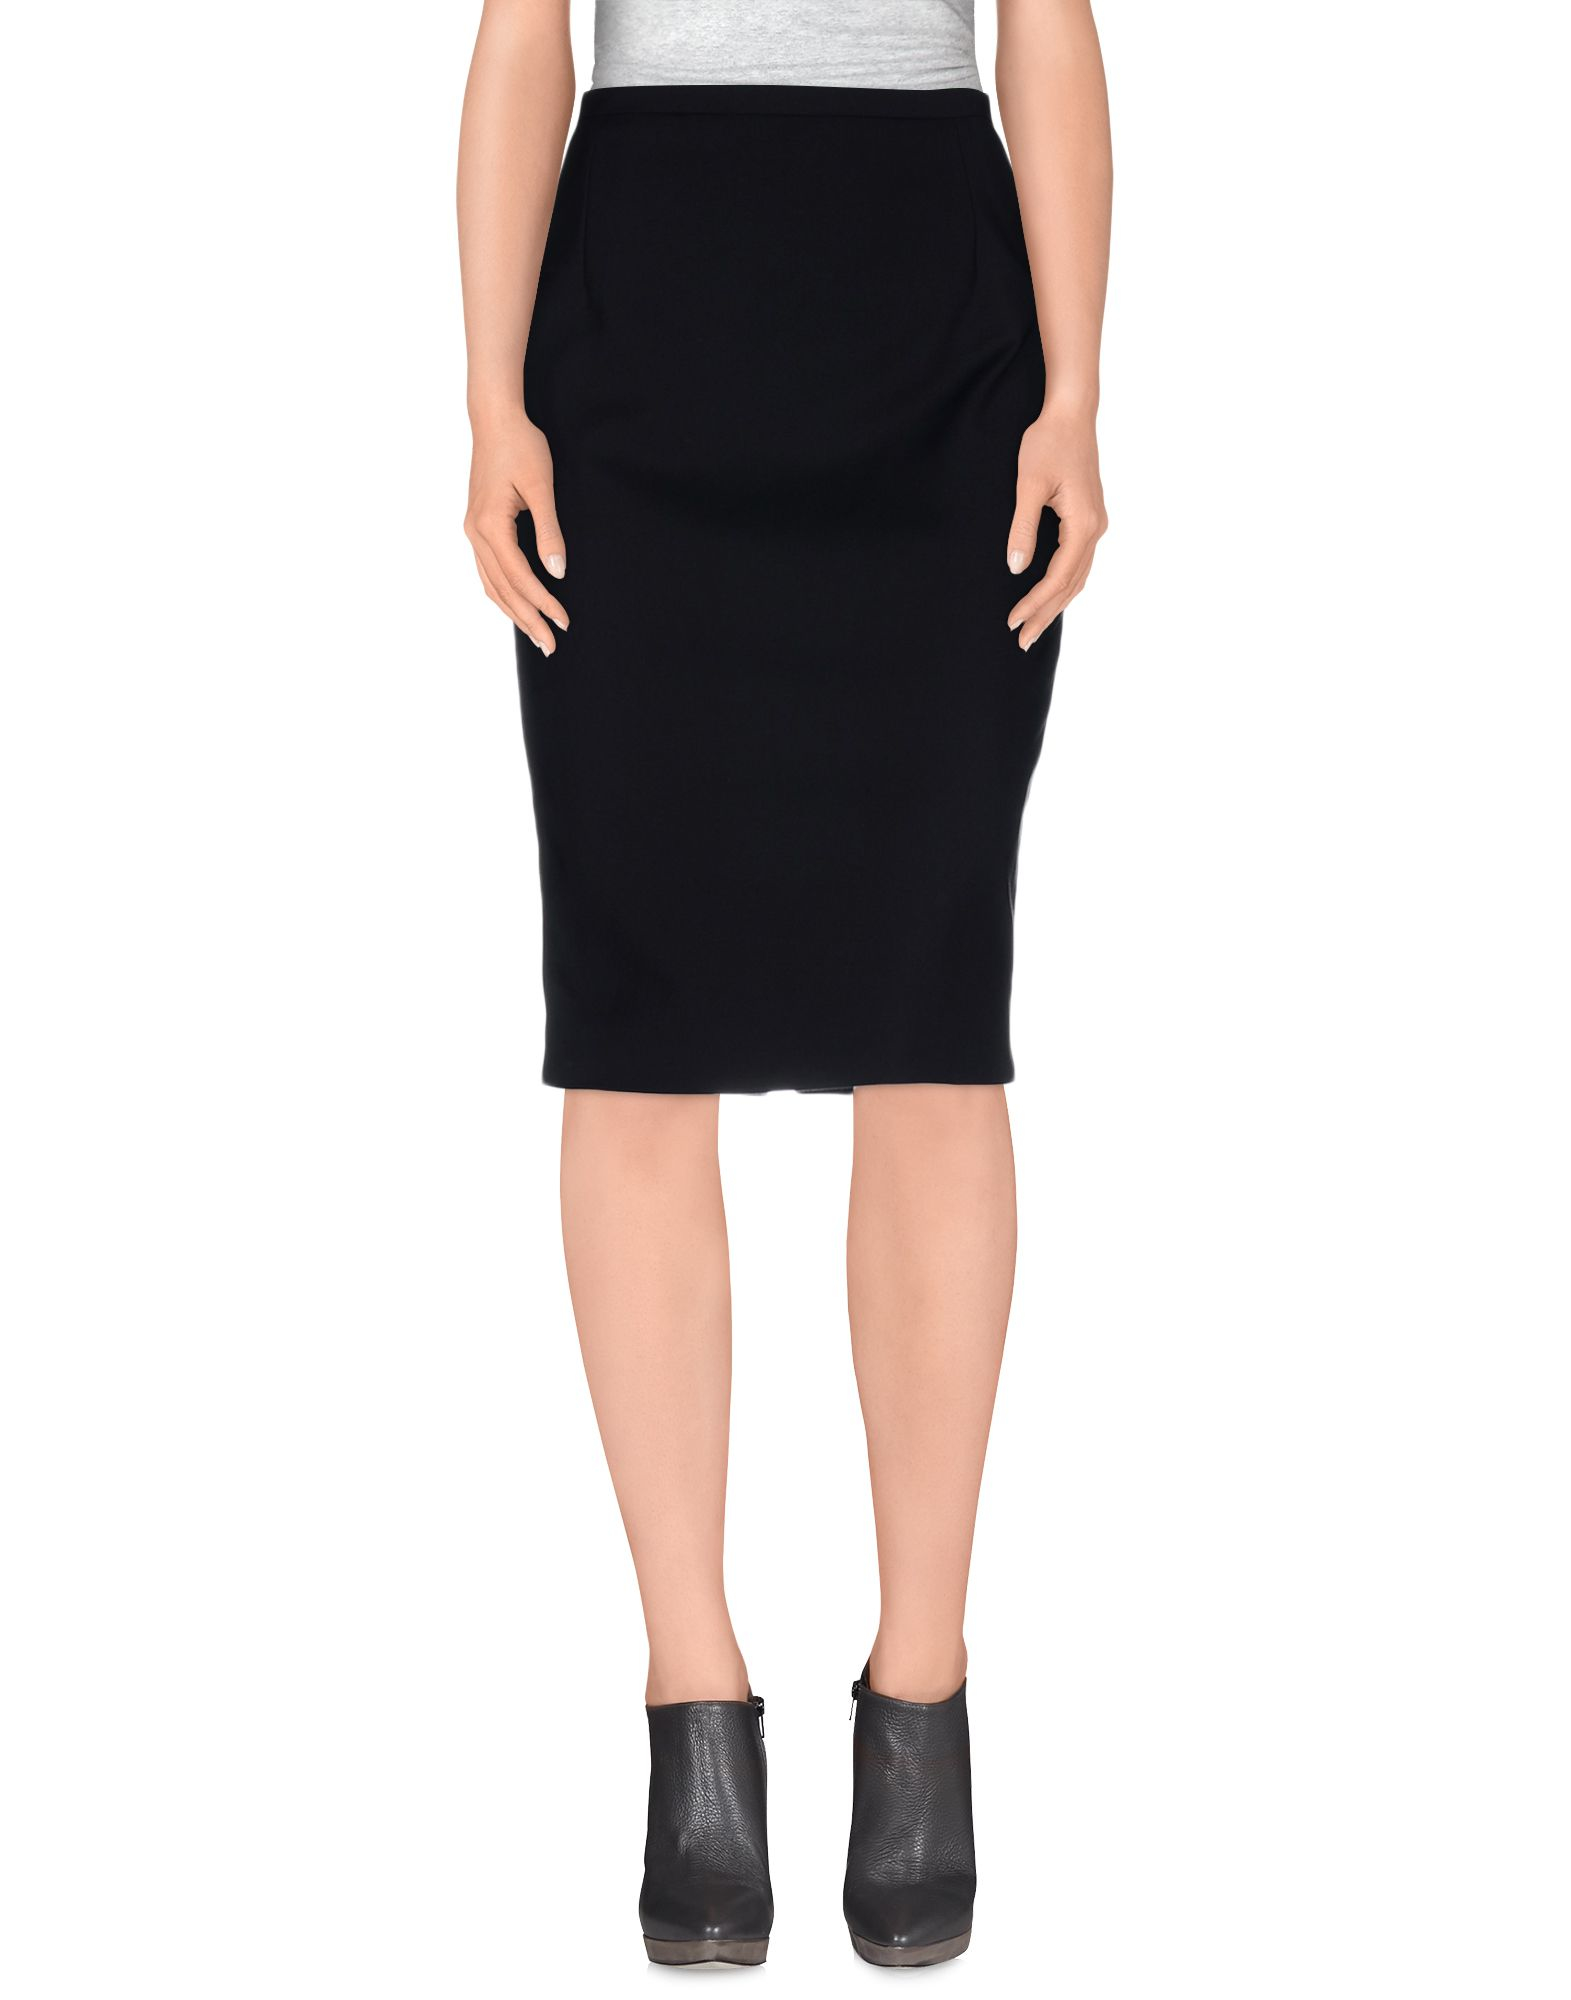 Lyst - Gucci Knee Length Skirt in Black